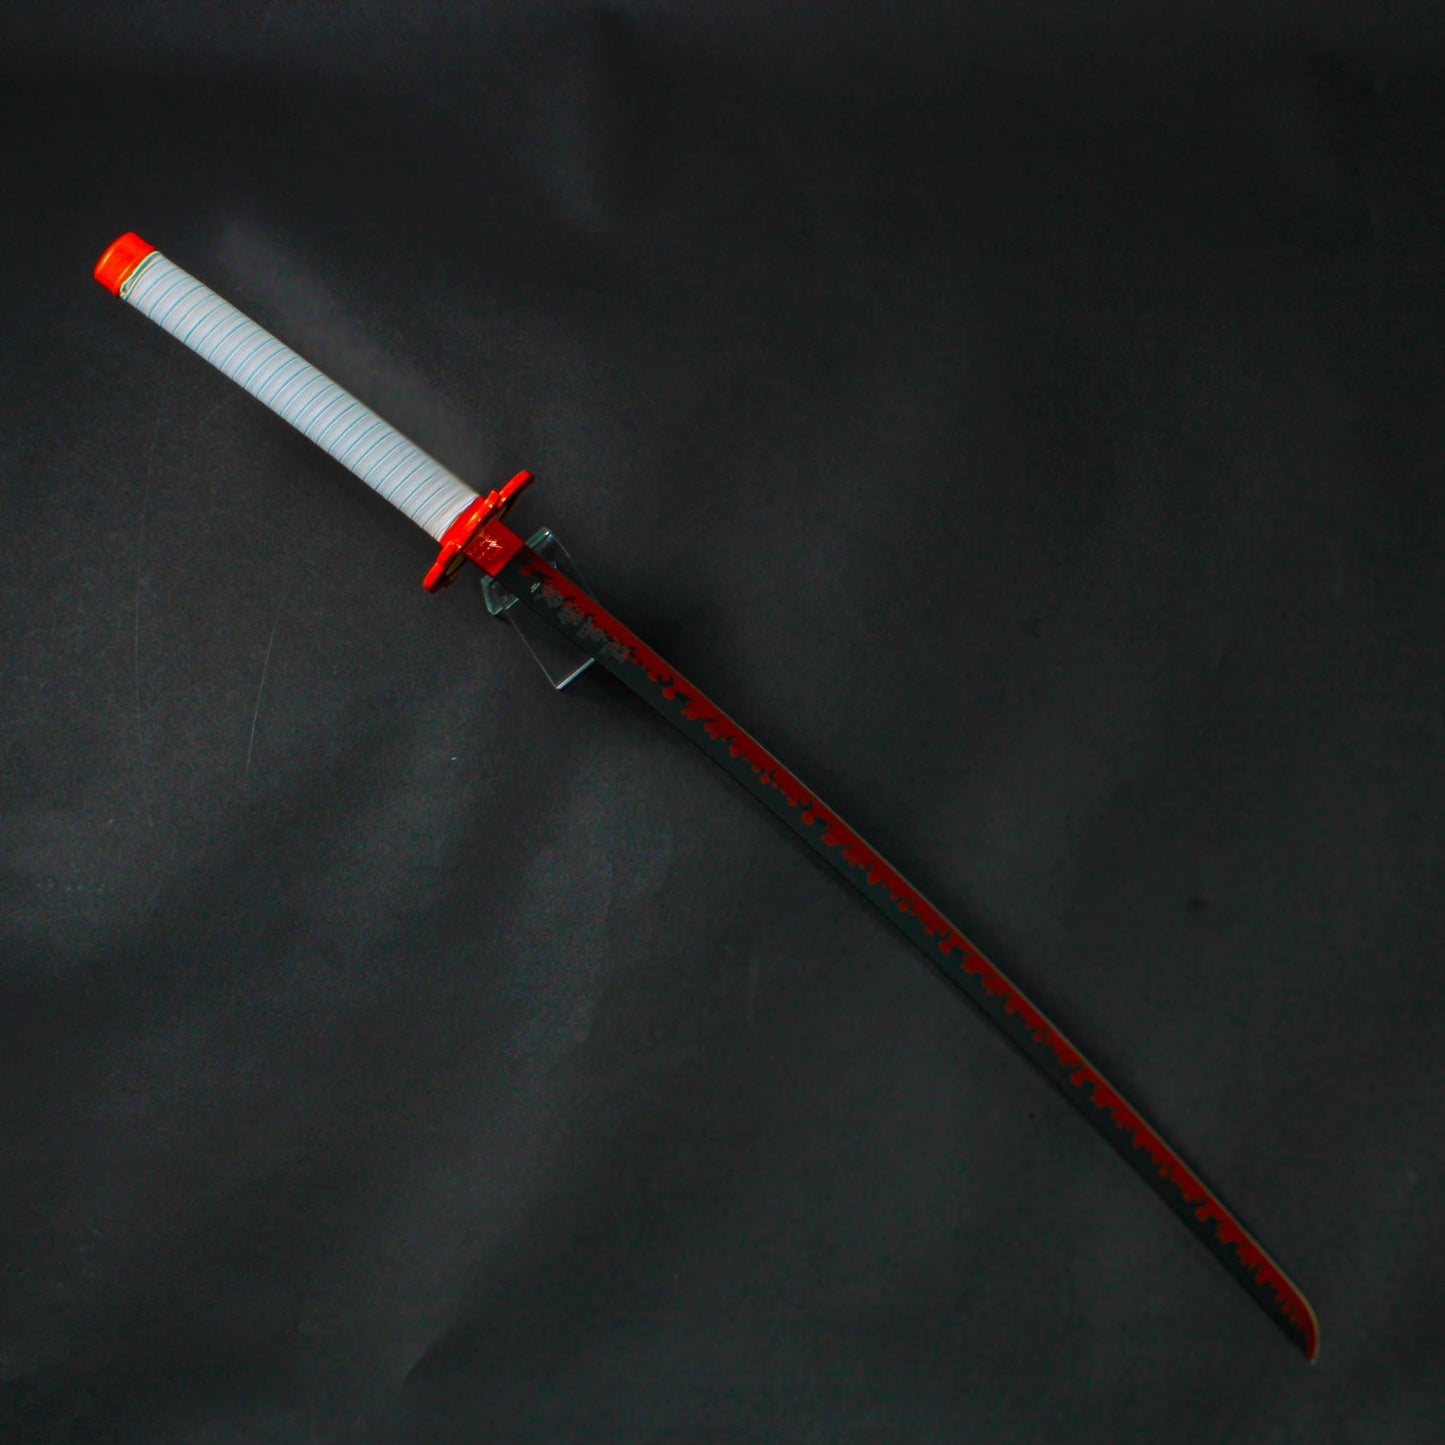 New Pipe and Rengoku Sword Reworks!